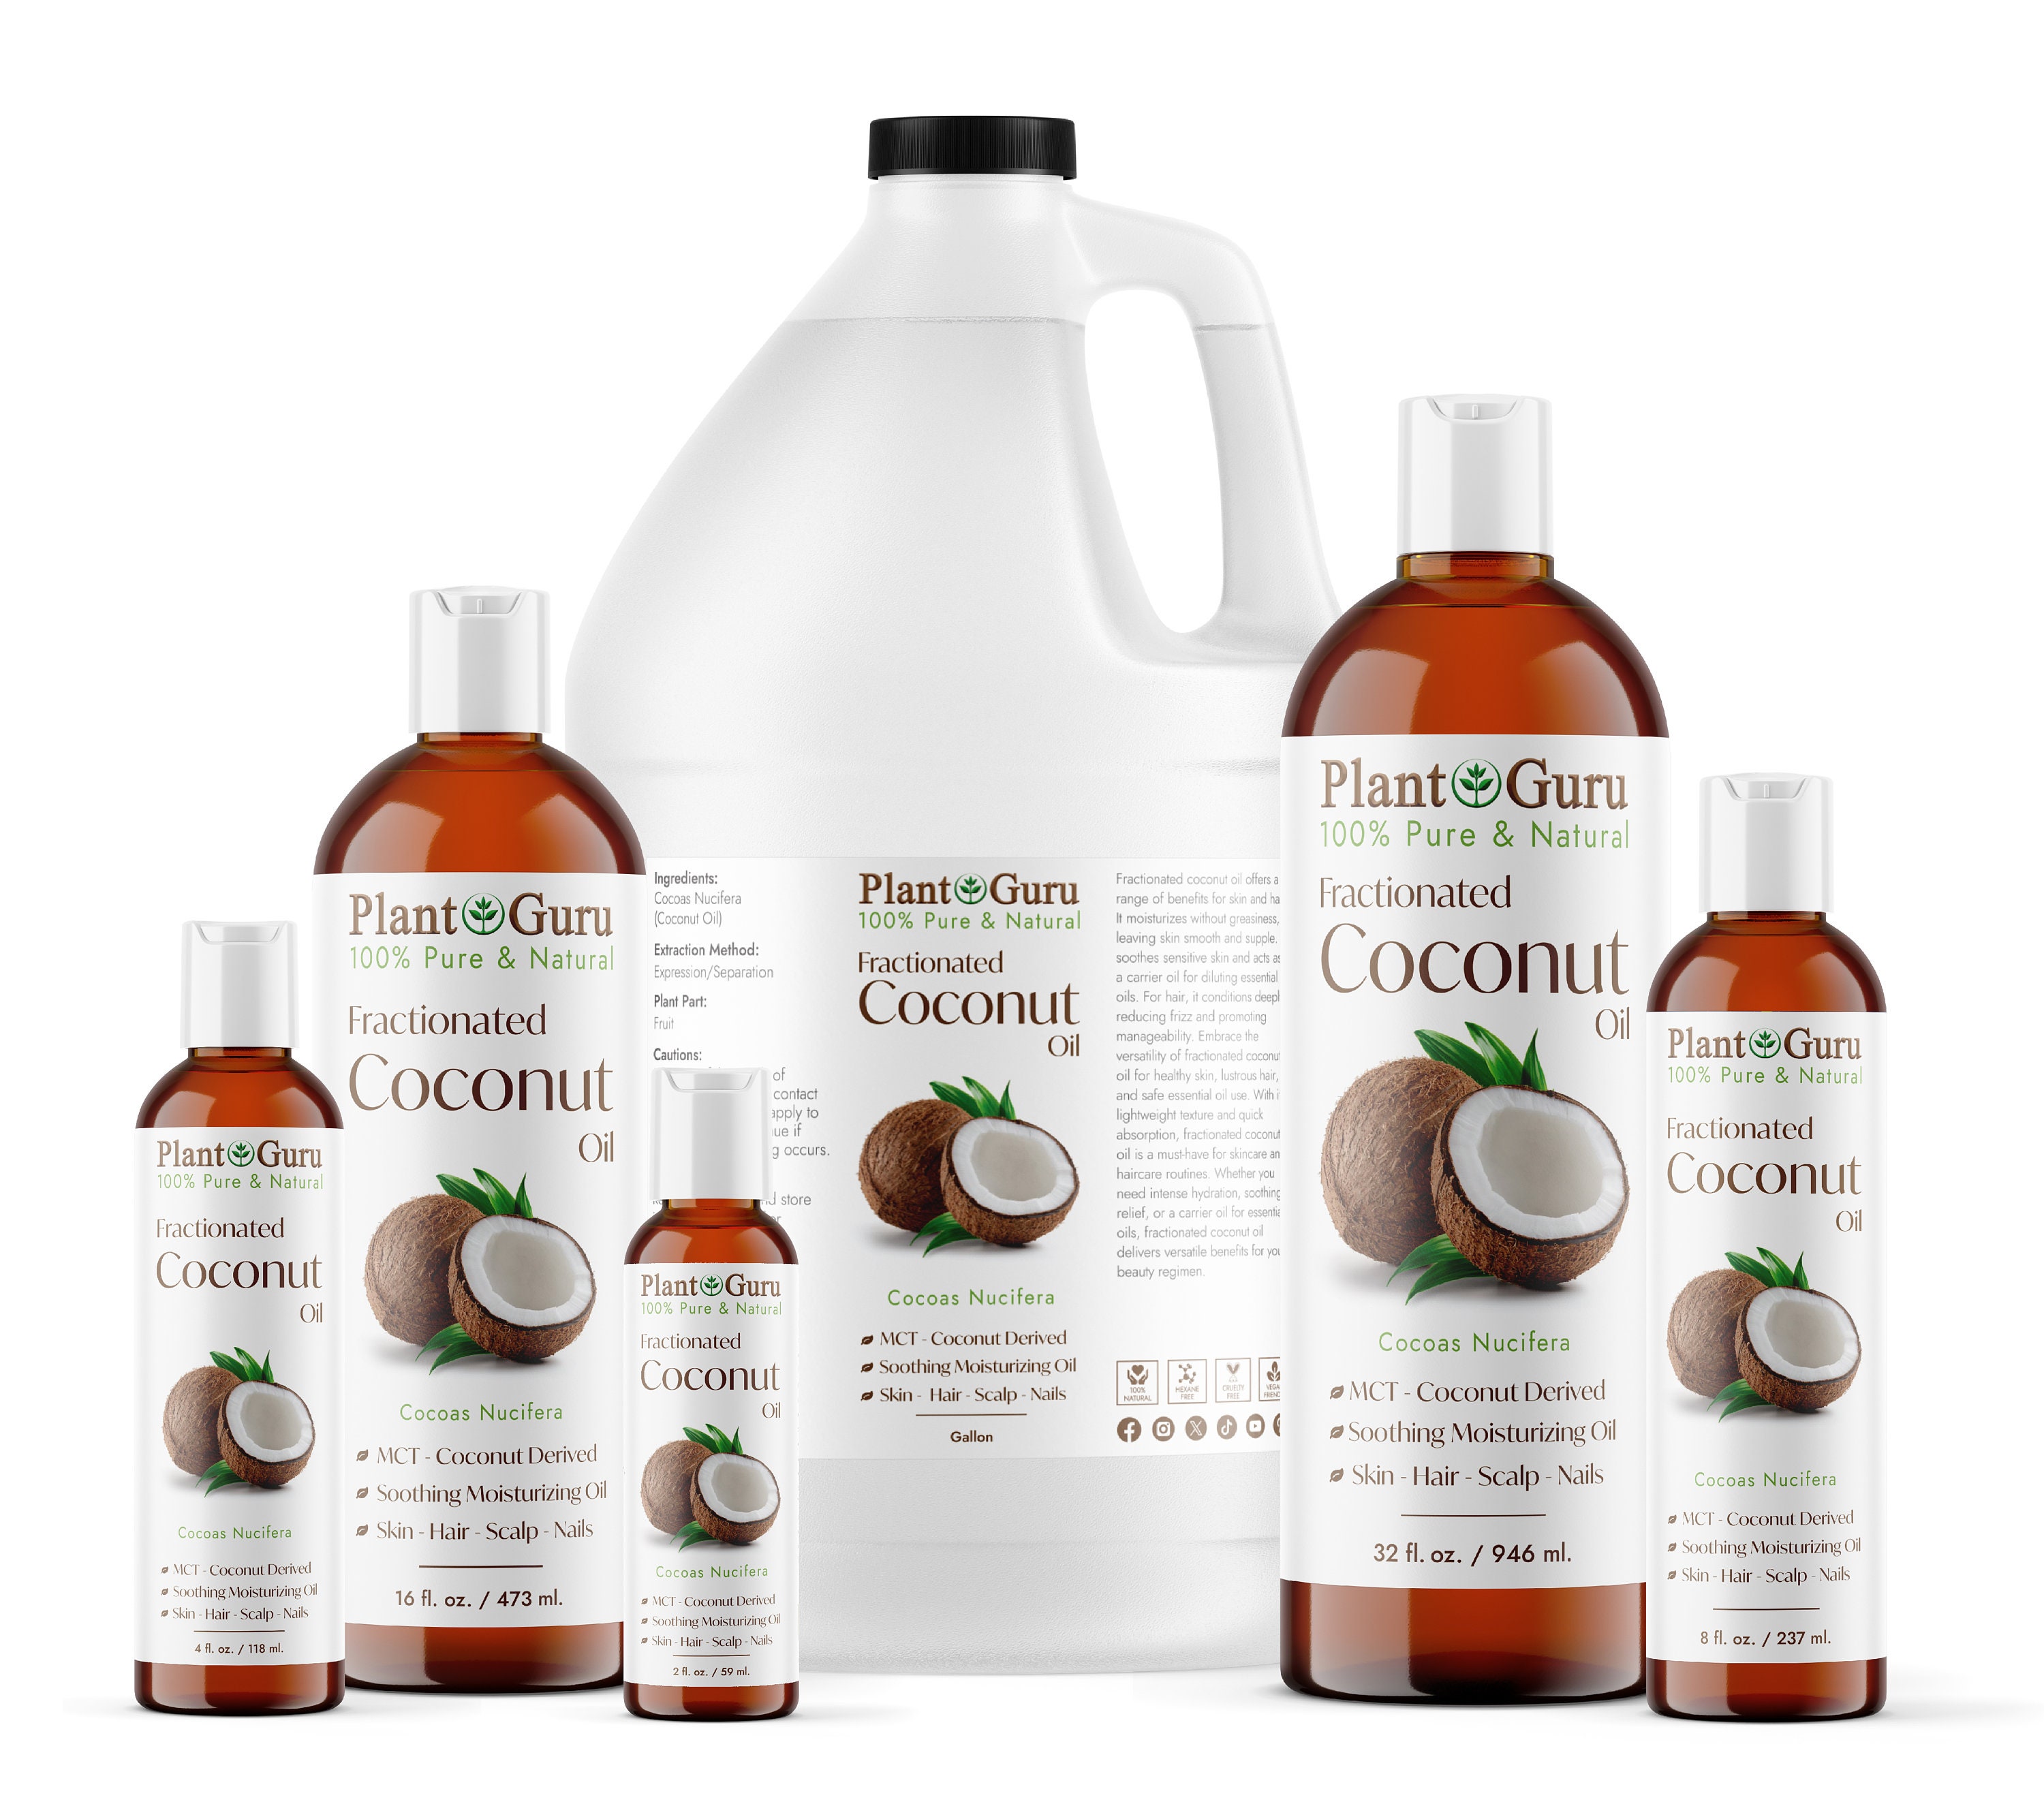 100% Natural, Organic, Sensual, Edible Massage Oil – RD Alchemy